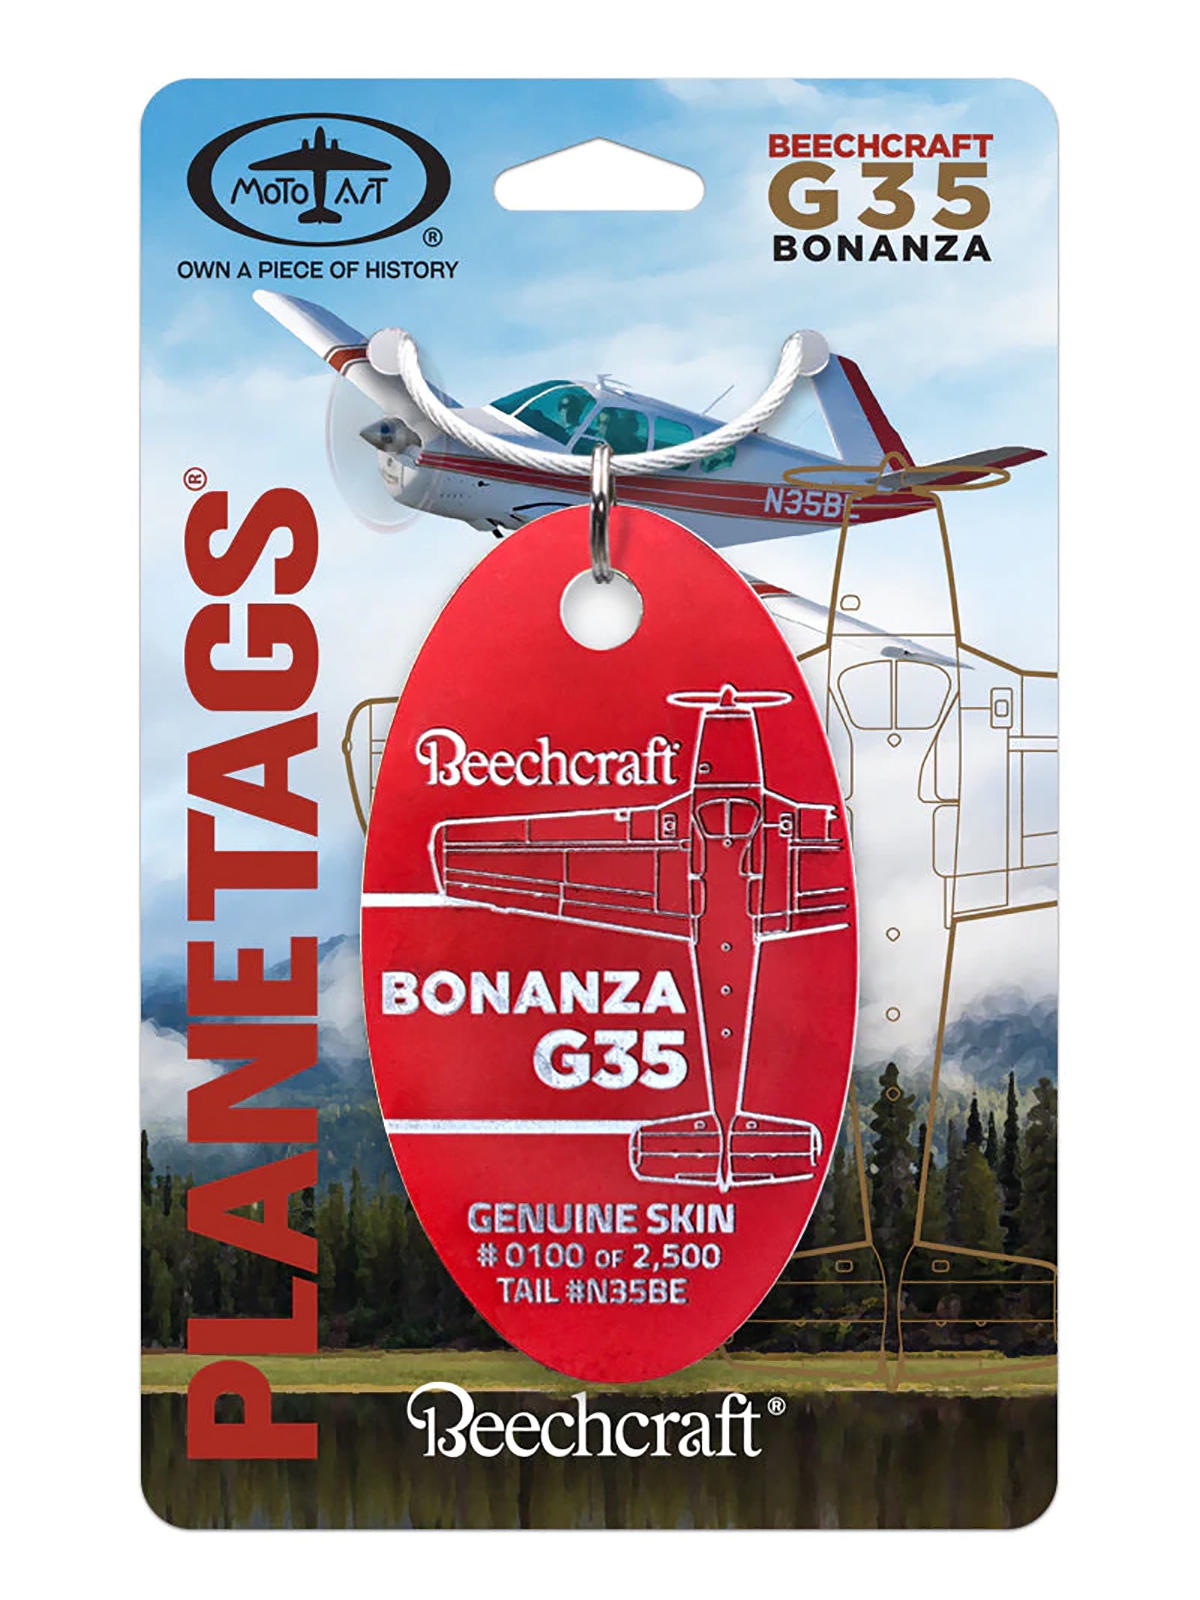 PlaneTags Key Fob - Beechcraft Bonanza G35 (N35BE), red